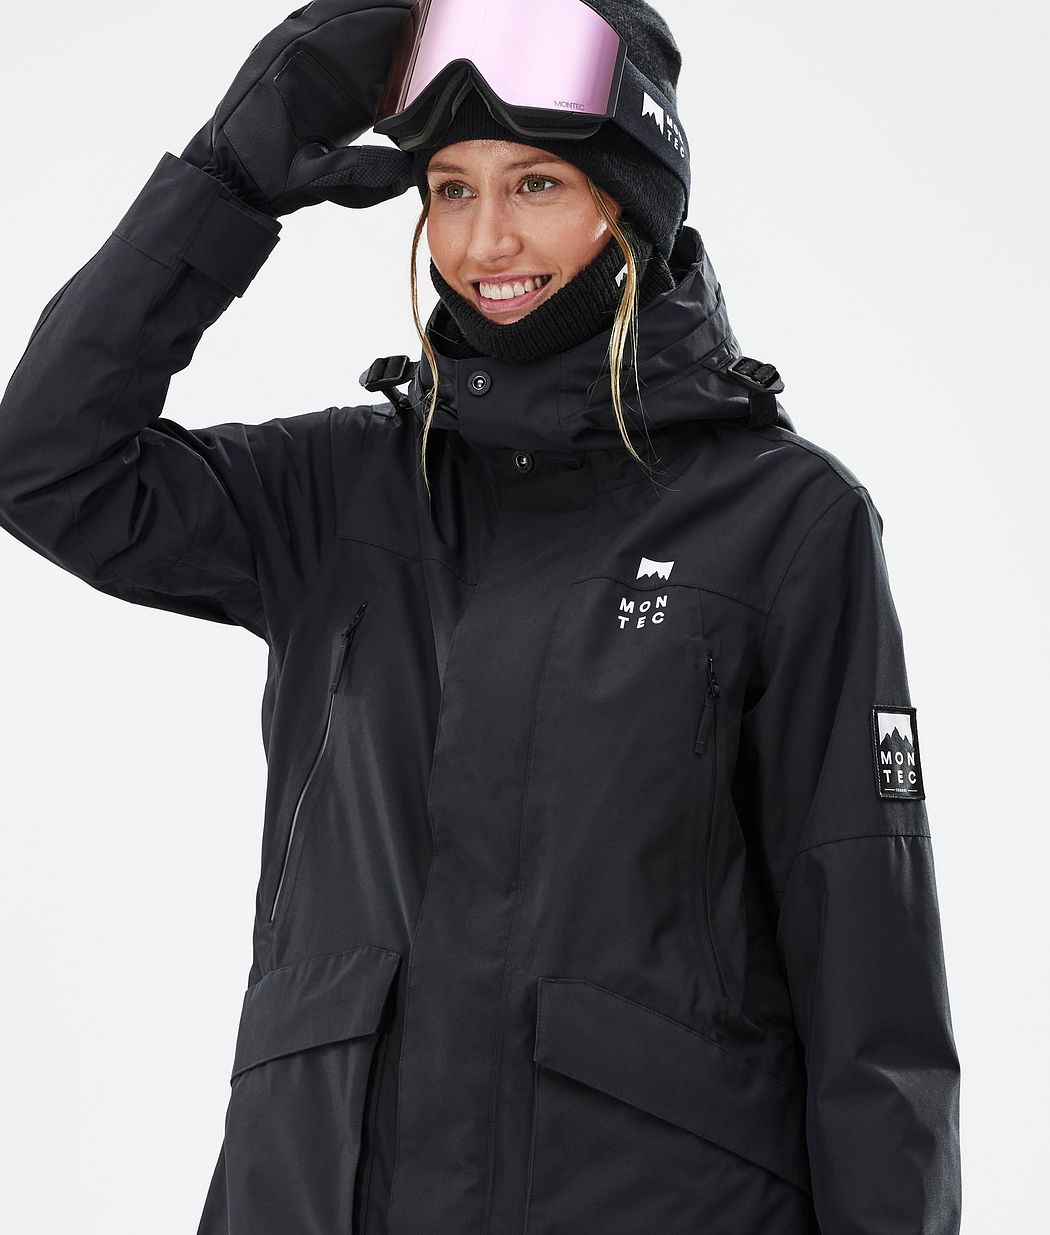 Virago W Snowboard Jacket Women Black Renewed